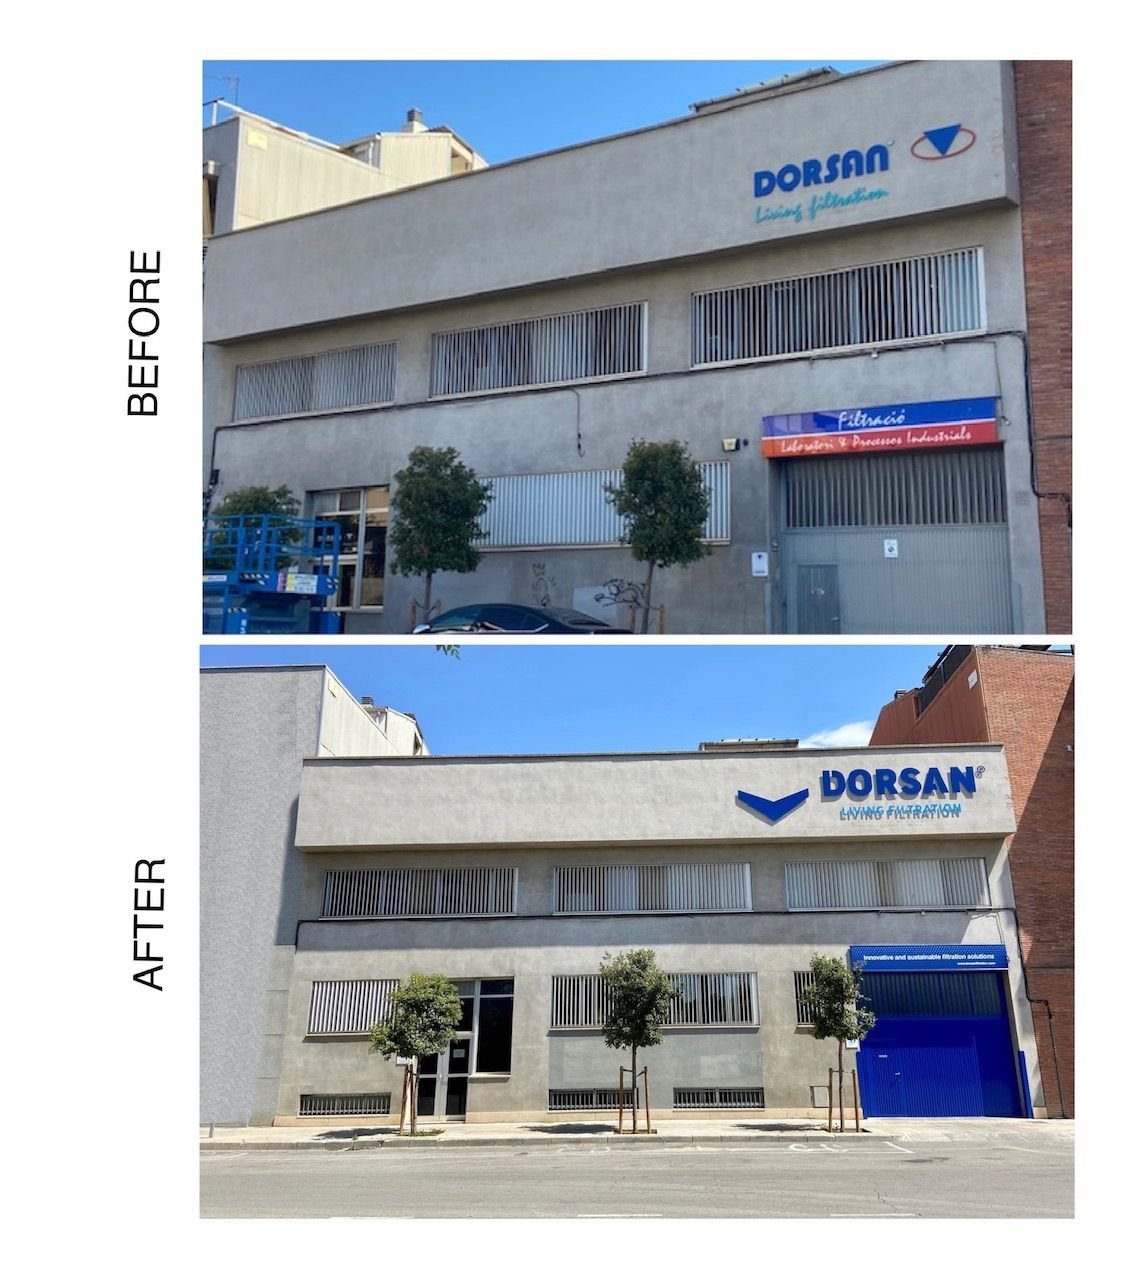 Nouvelle enseigne logo Dorsan sur la façade